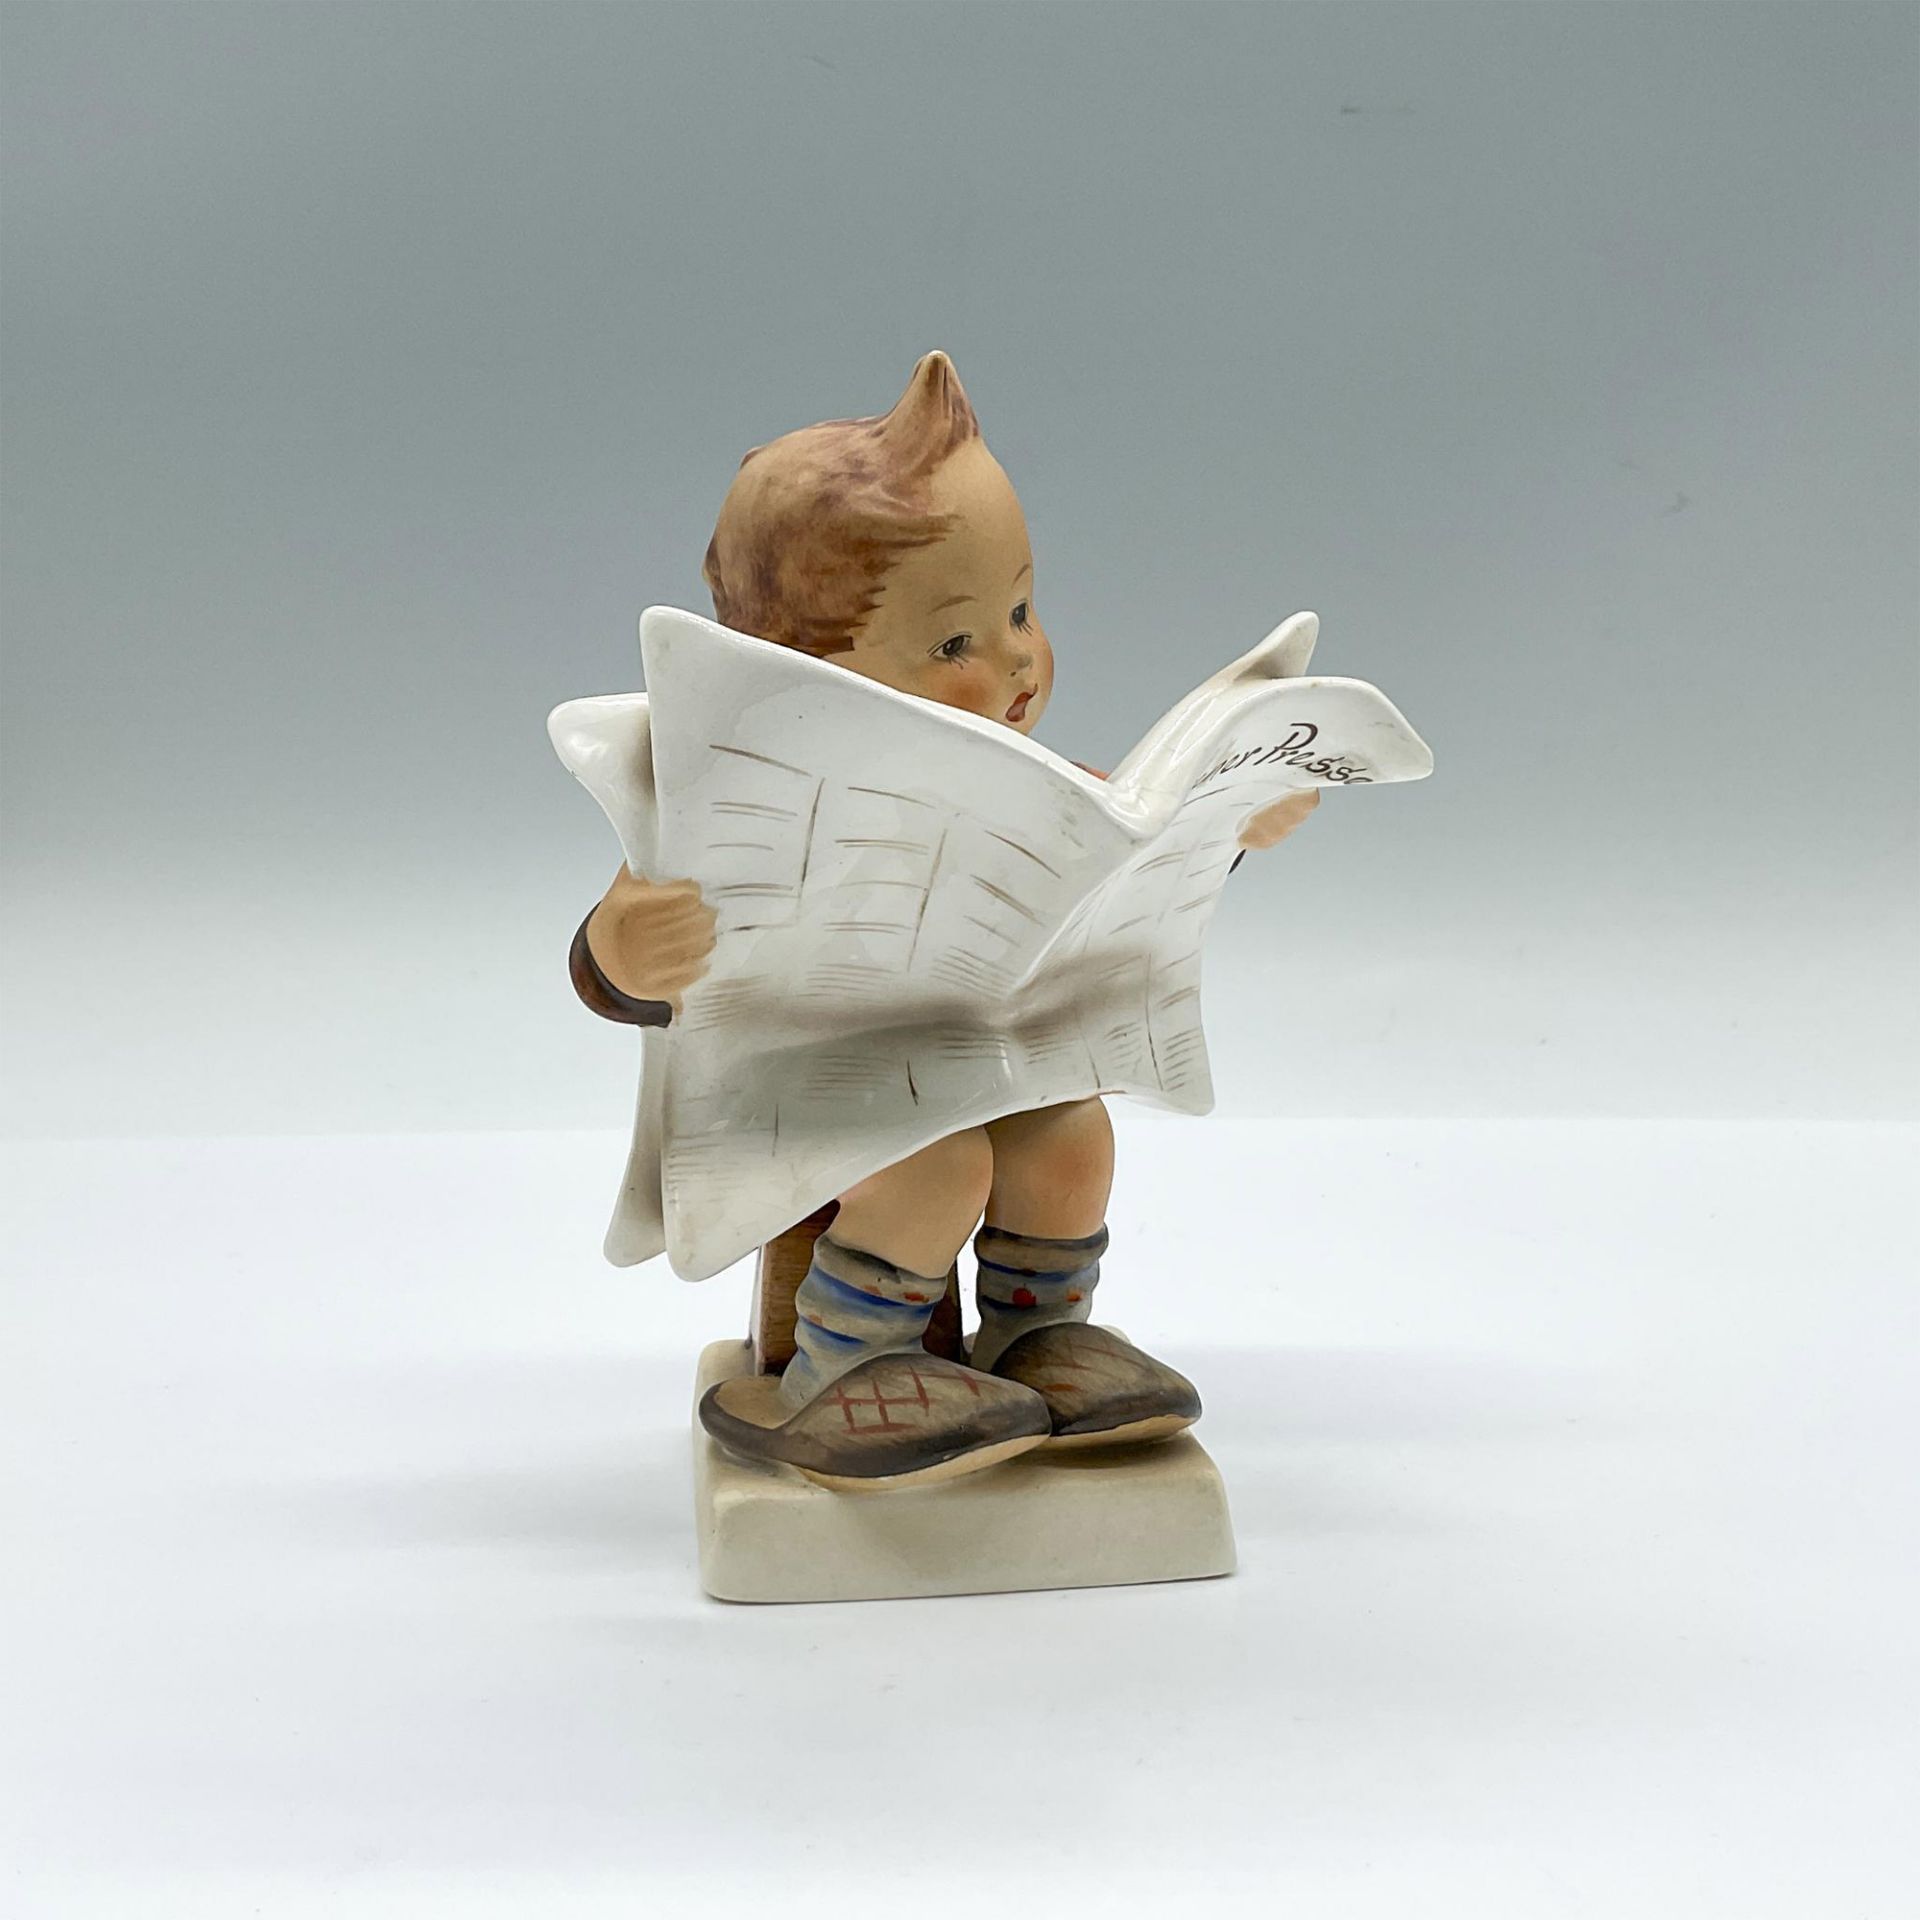 Goebel Hummel Porcelain Figurine, Latest News